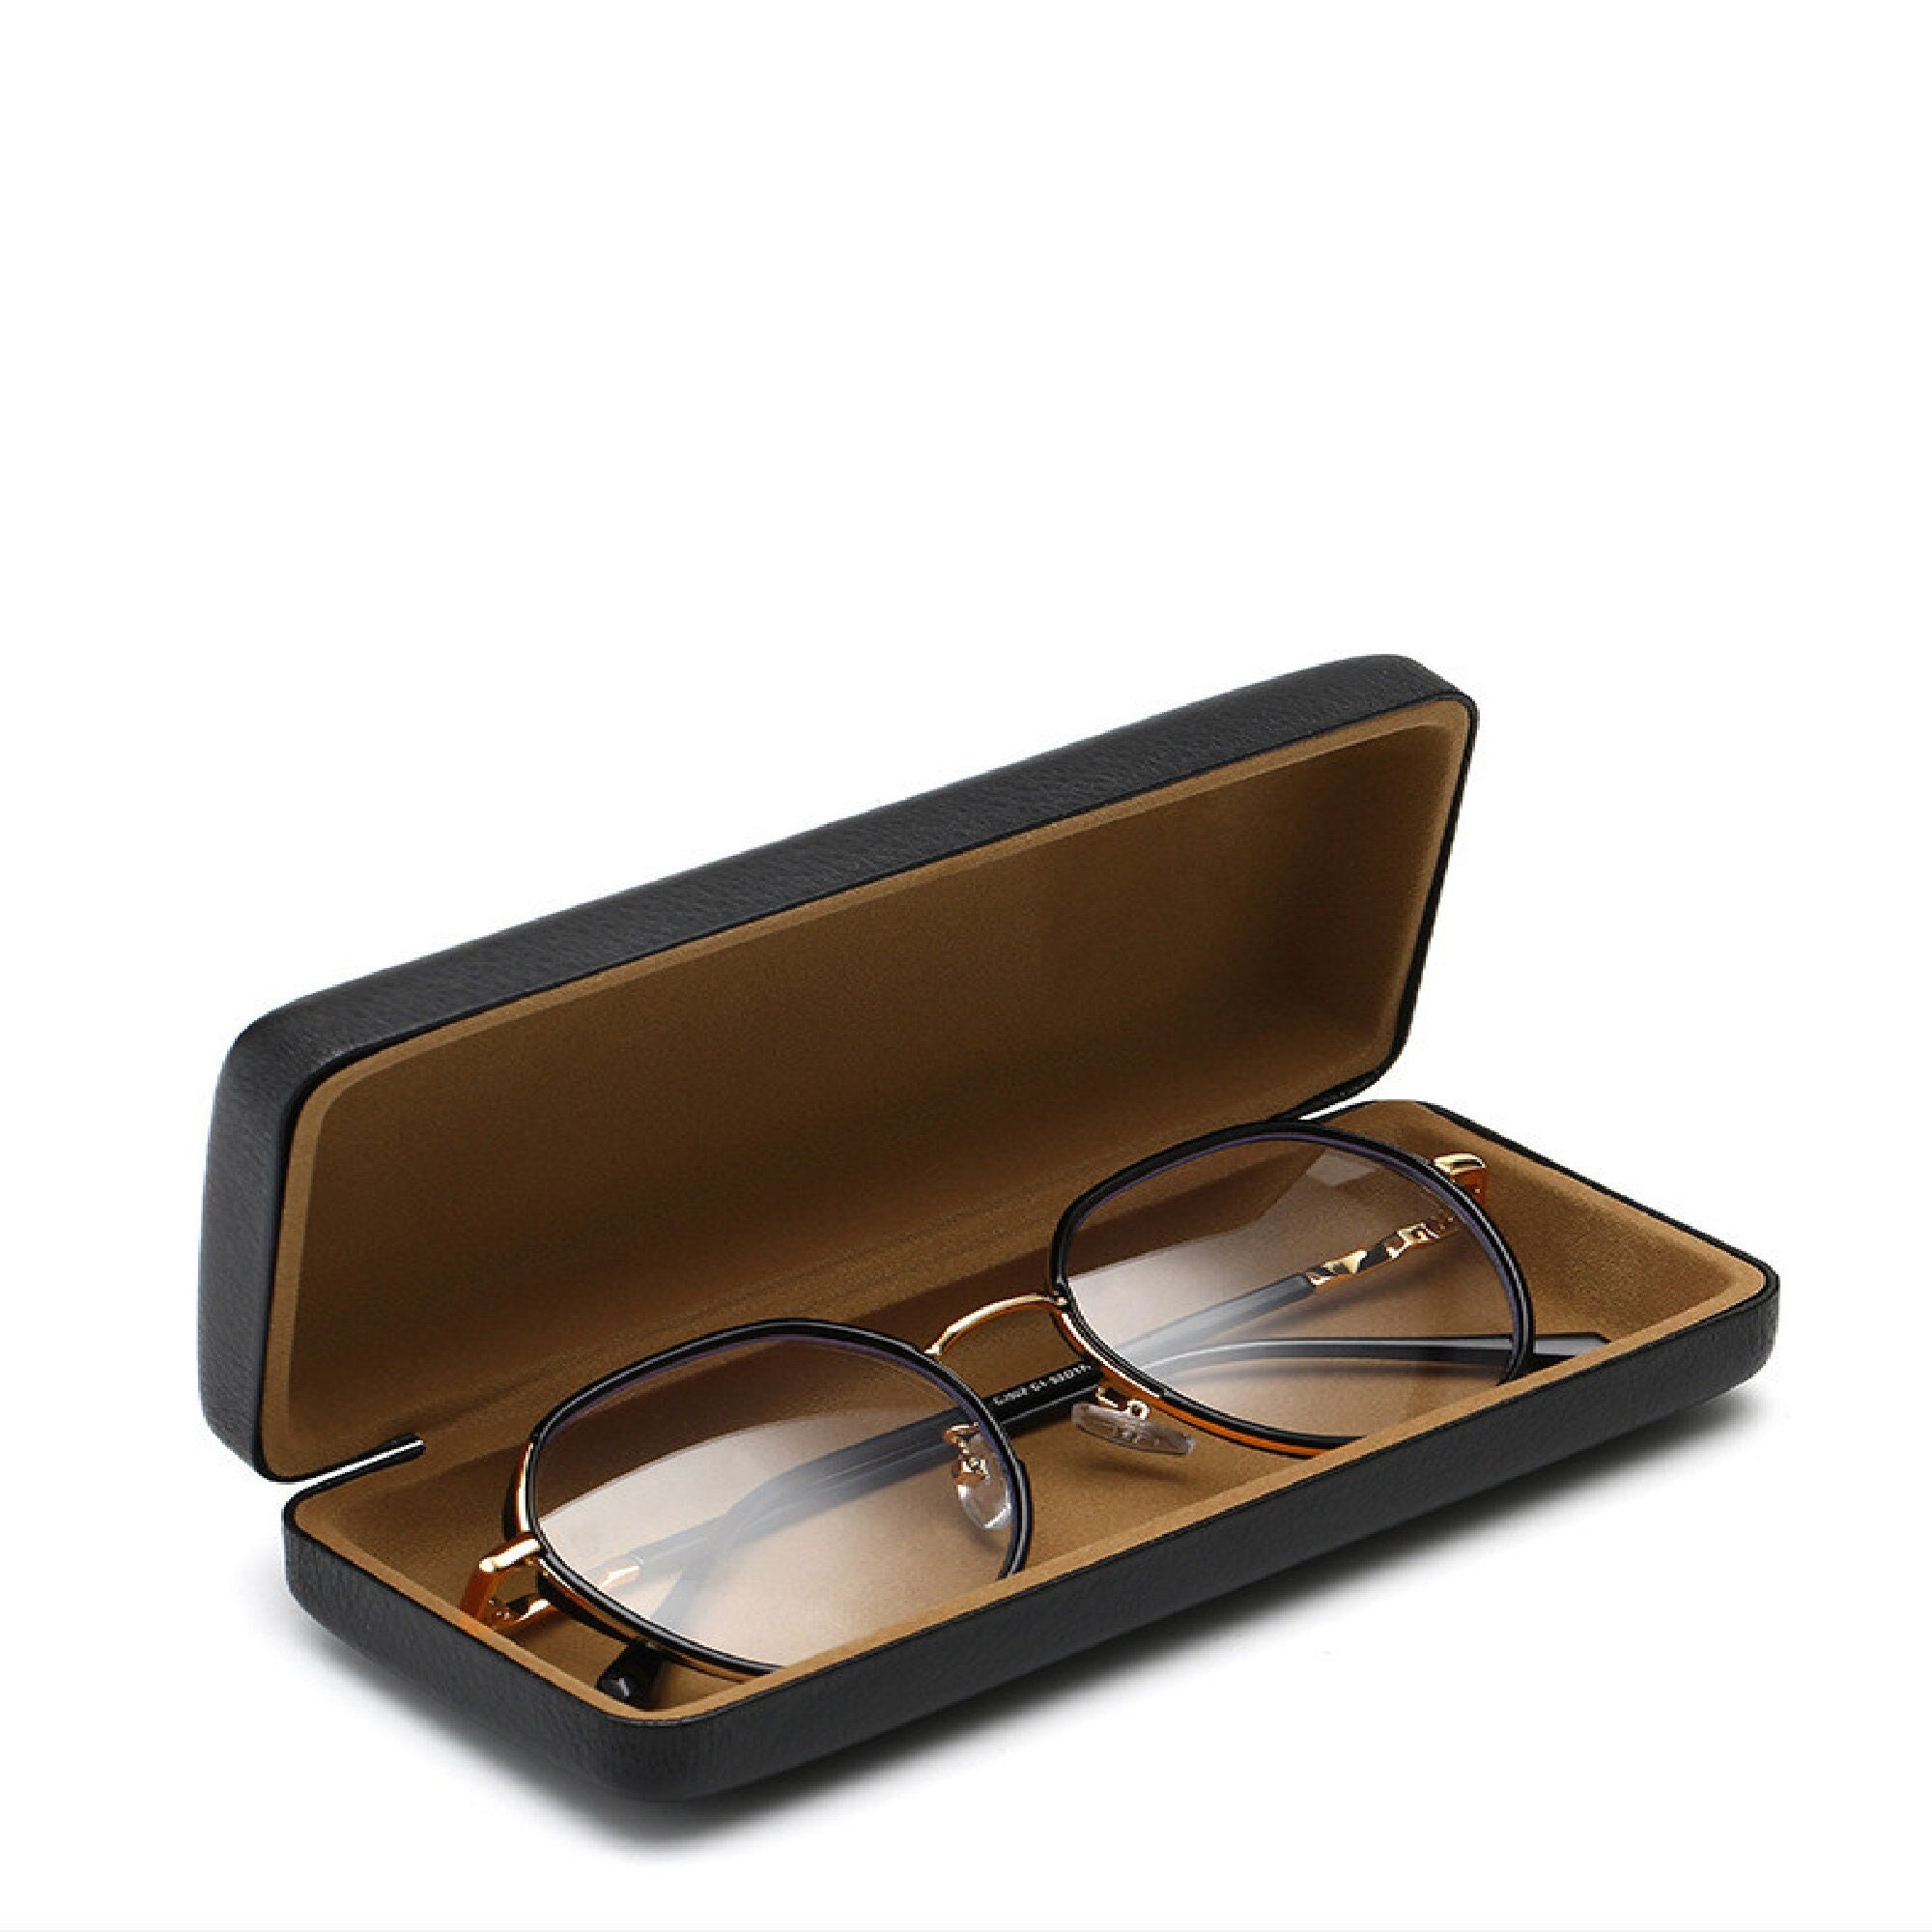 Discover 148+ brocade sunglasses case